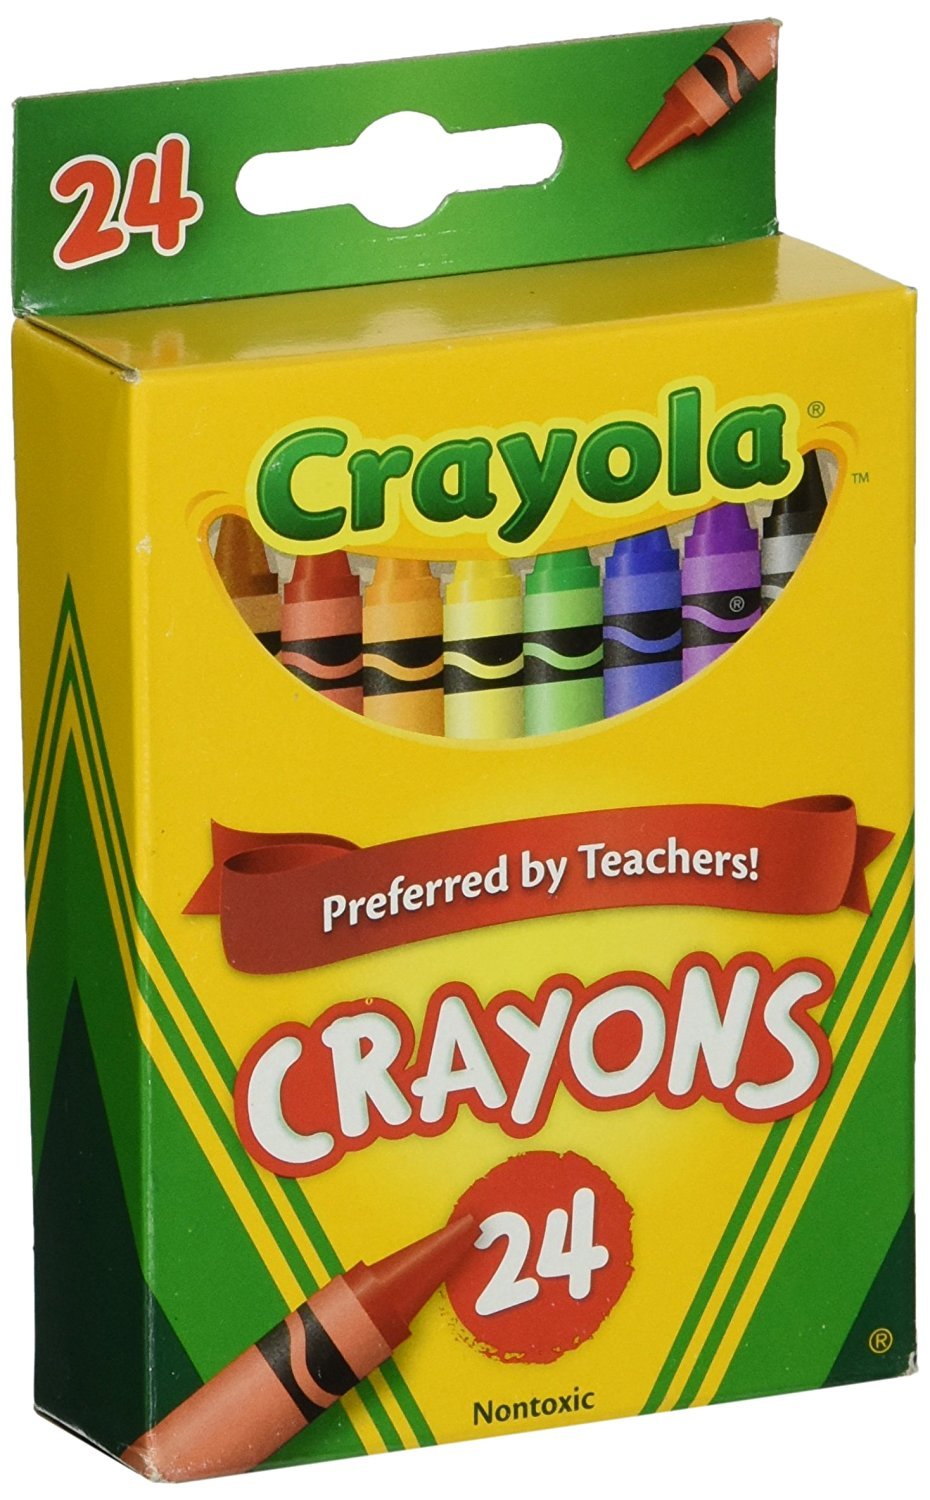 Crayola count box.